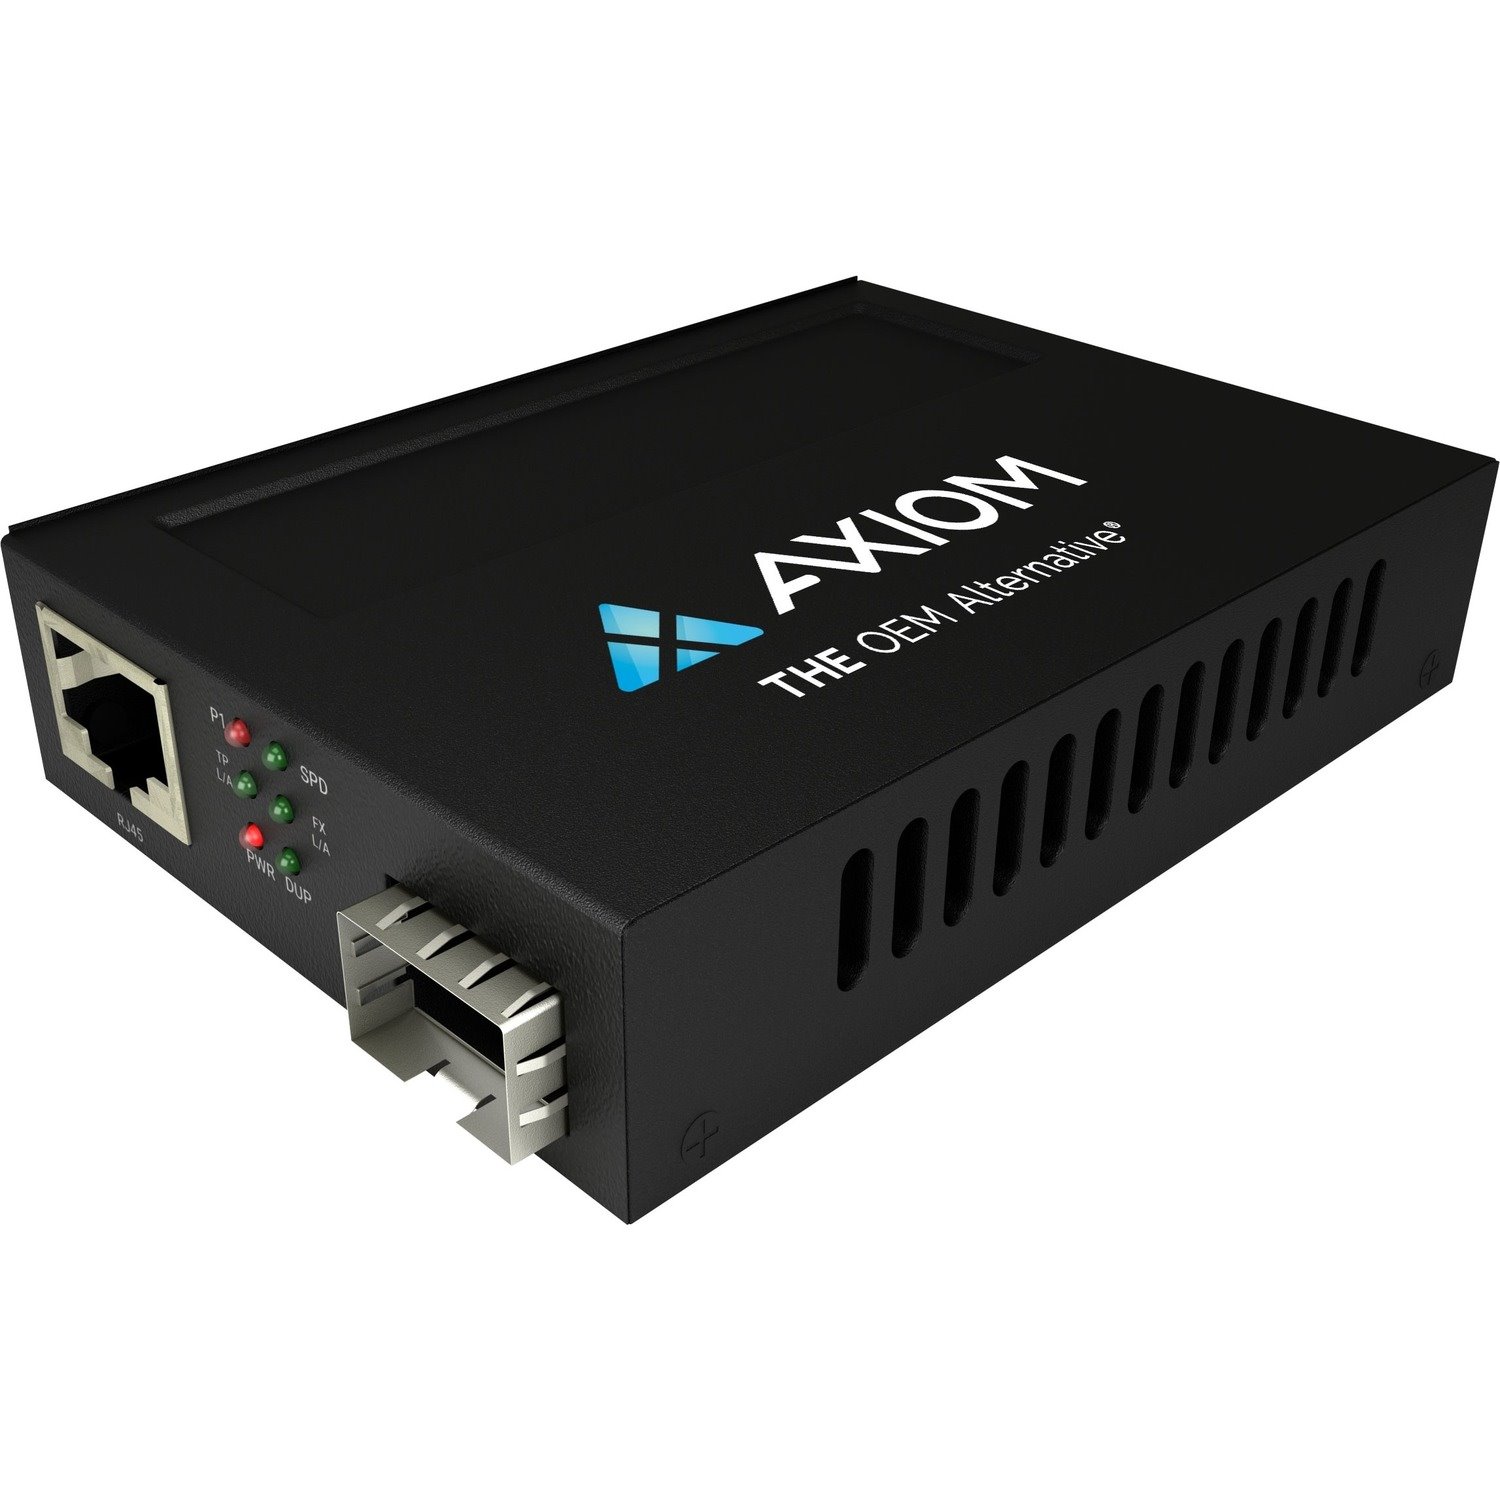 Axiom 1Gbs POE+ RJ45 to SFP Fiber Media Converter - Open SFP Port